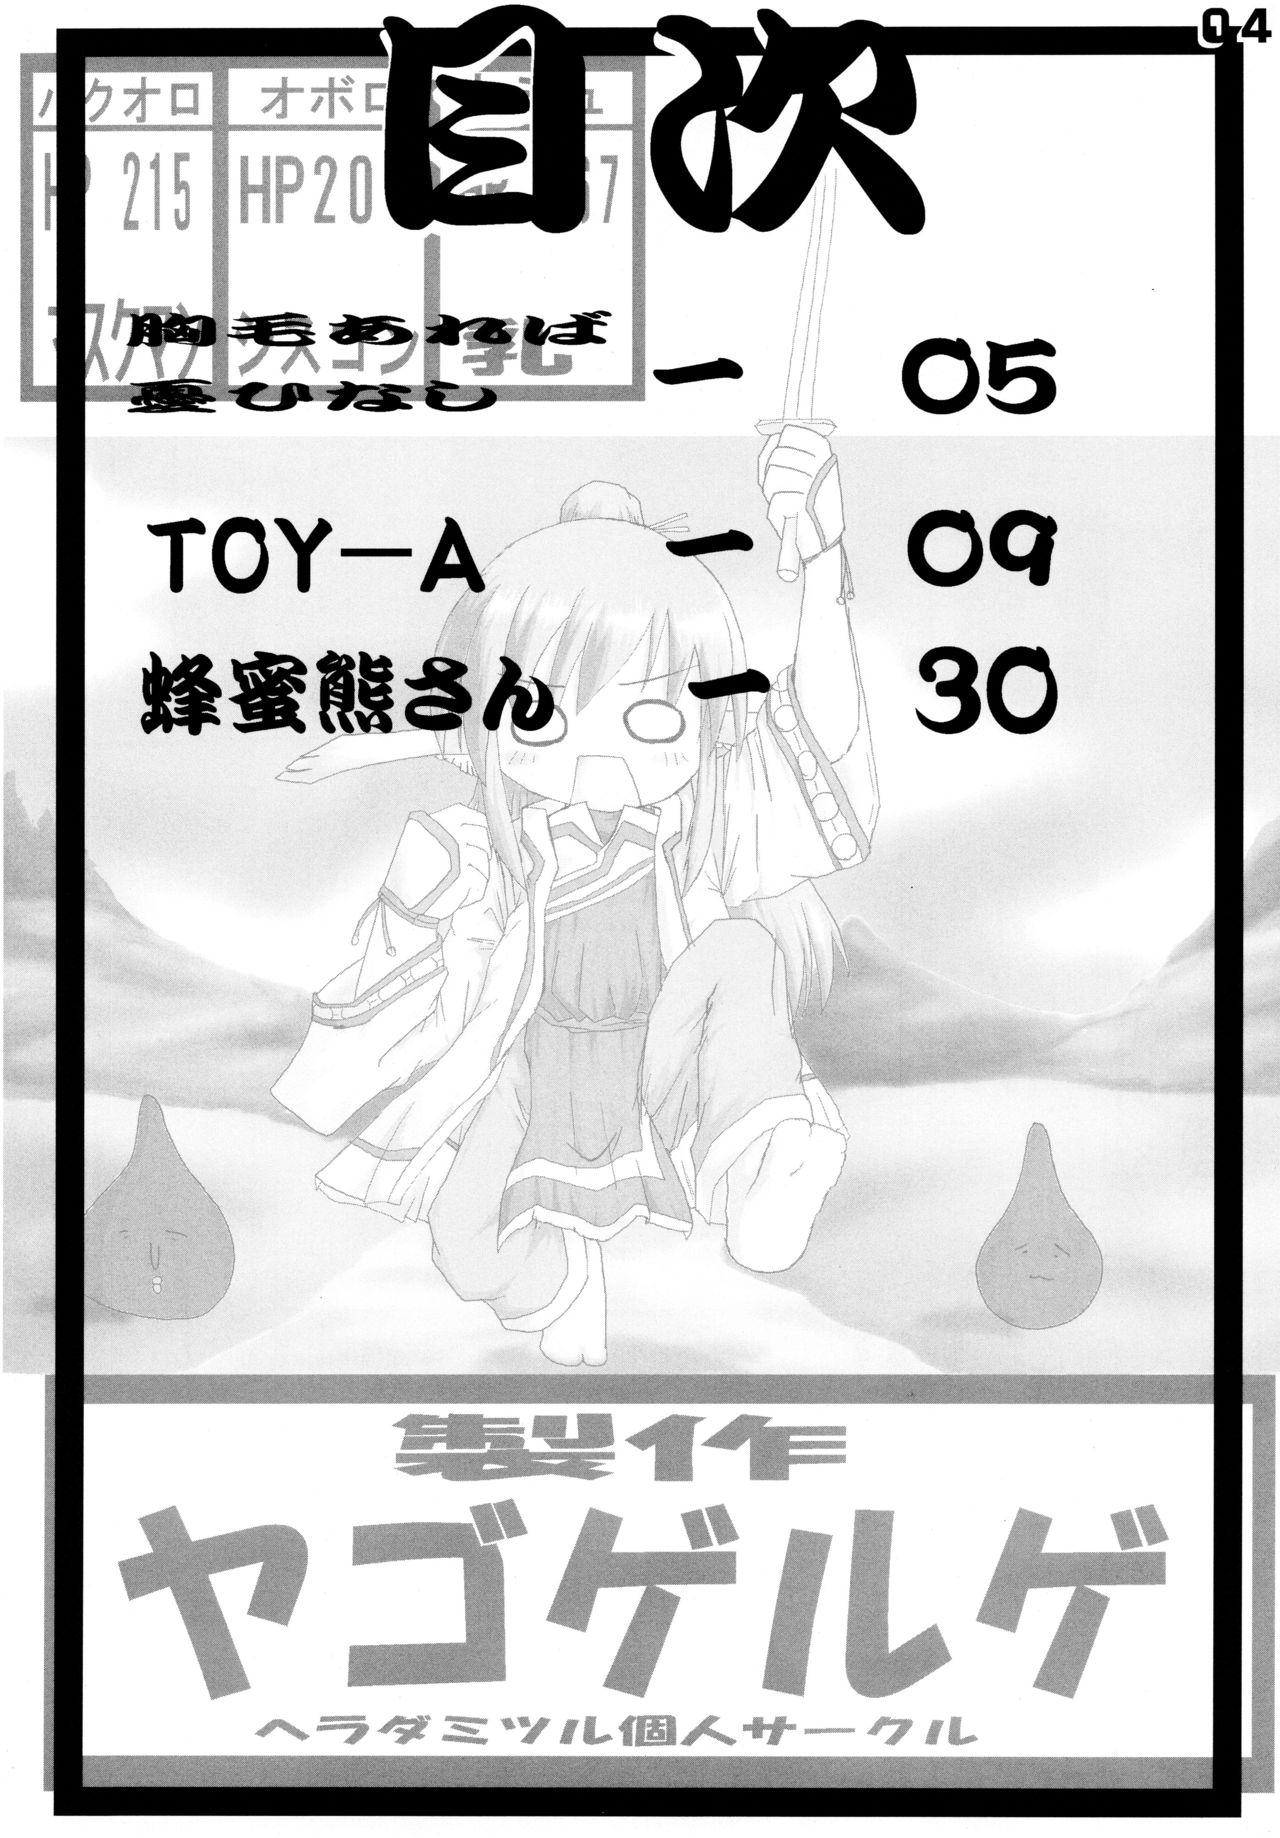 Toy-A 3